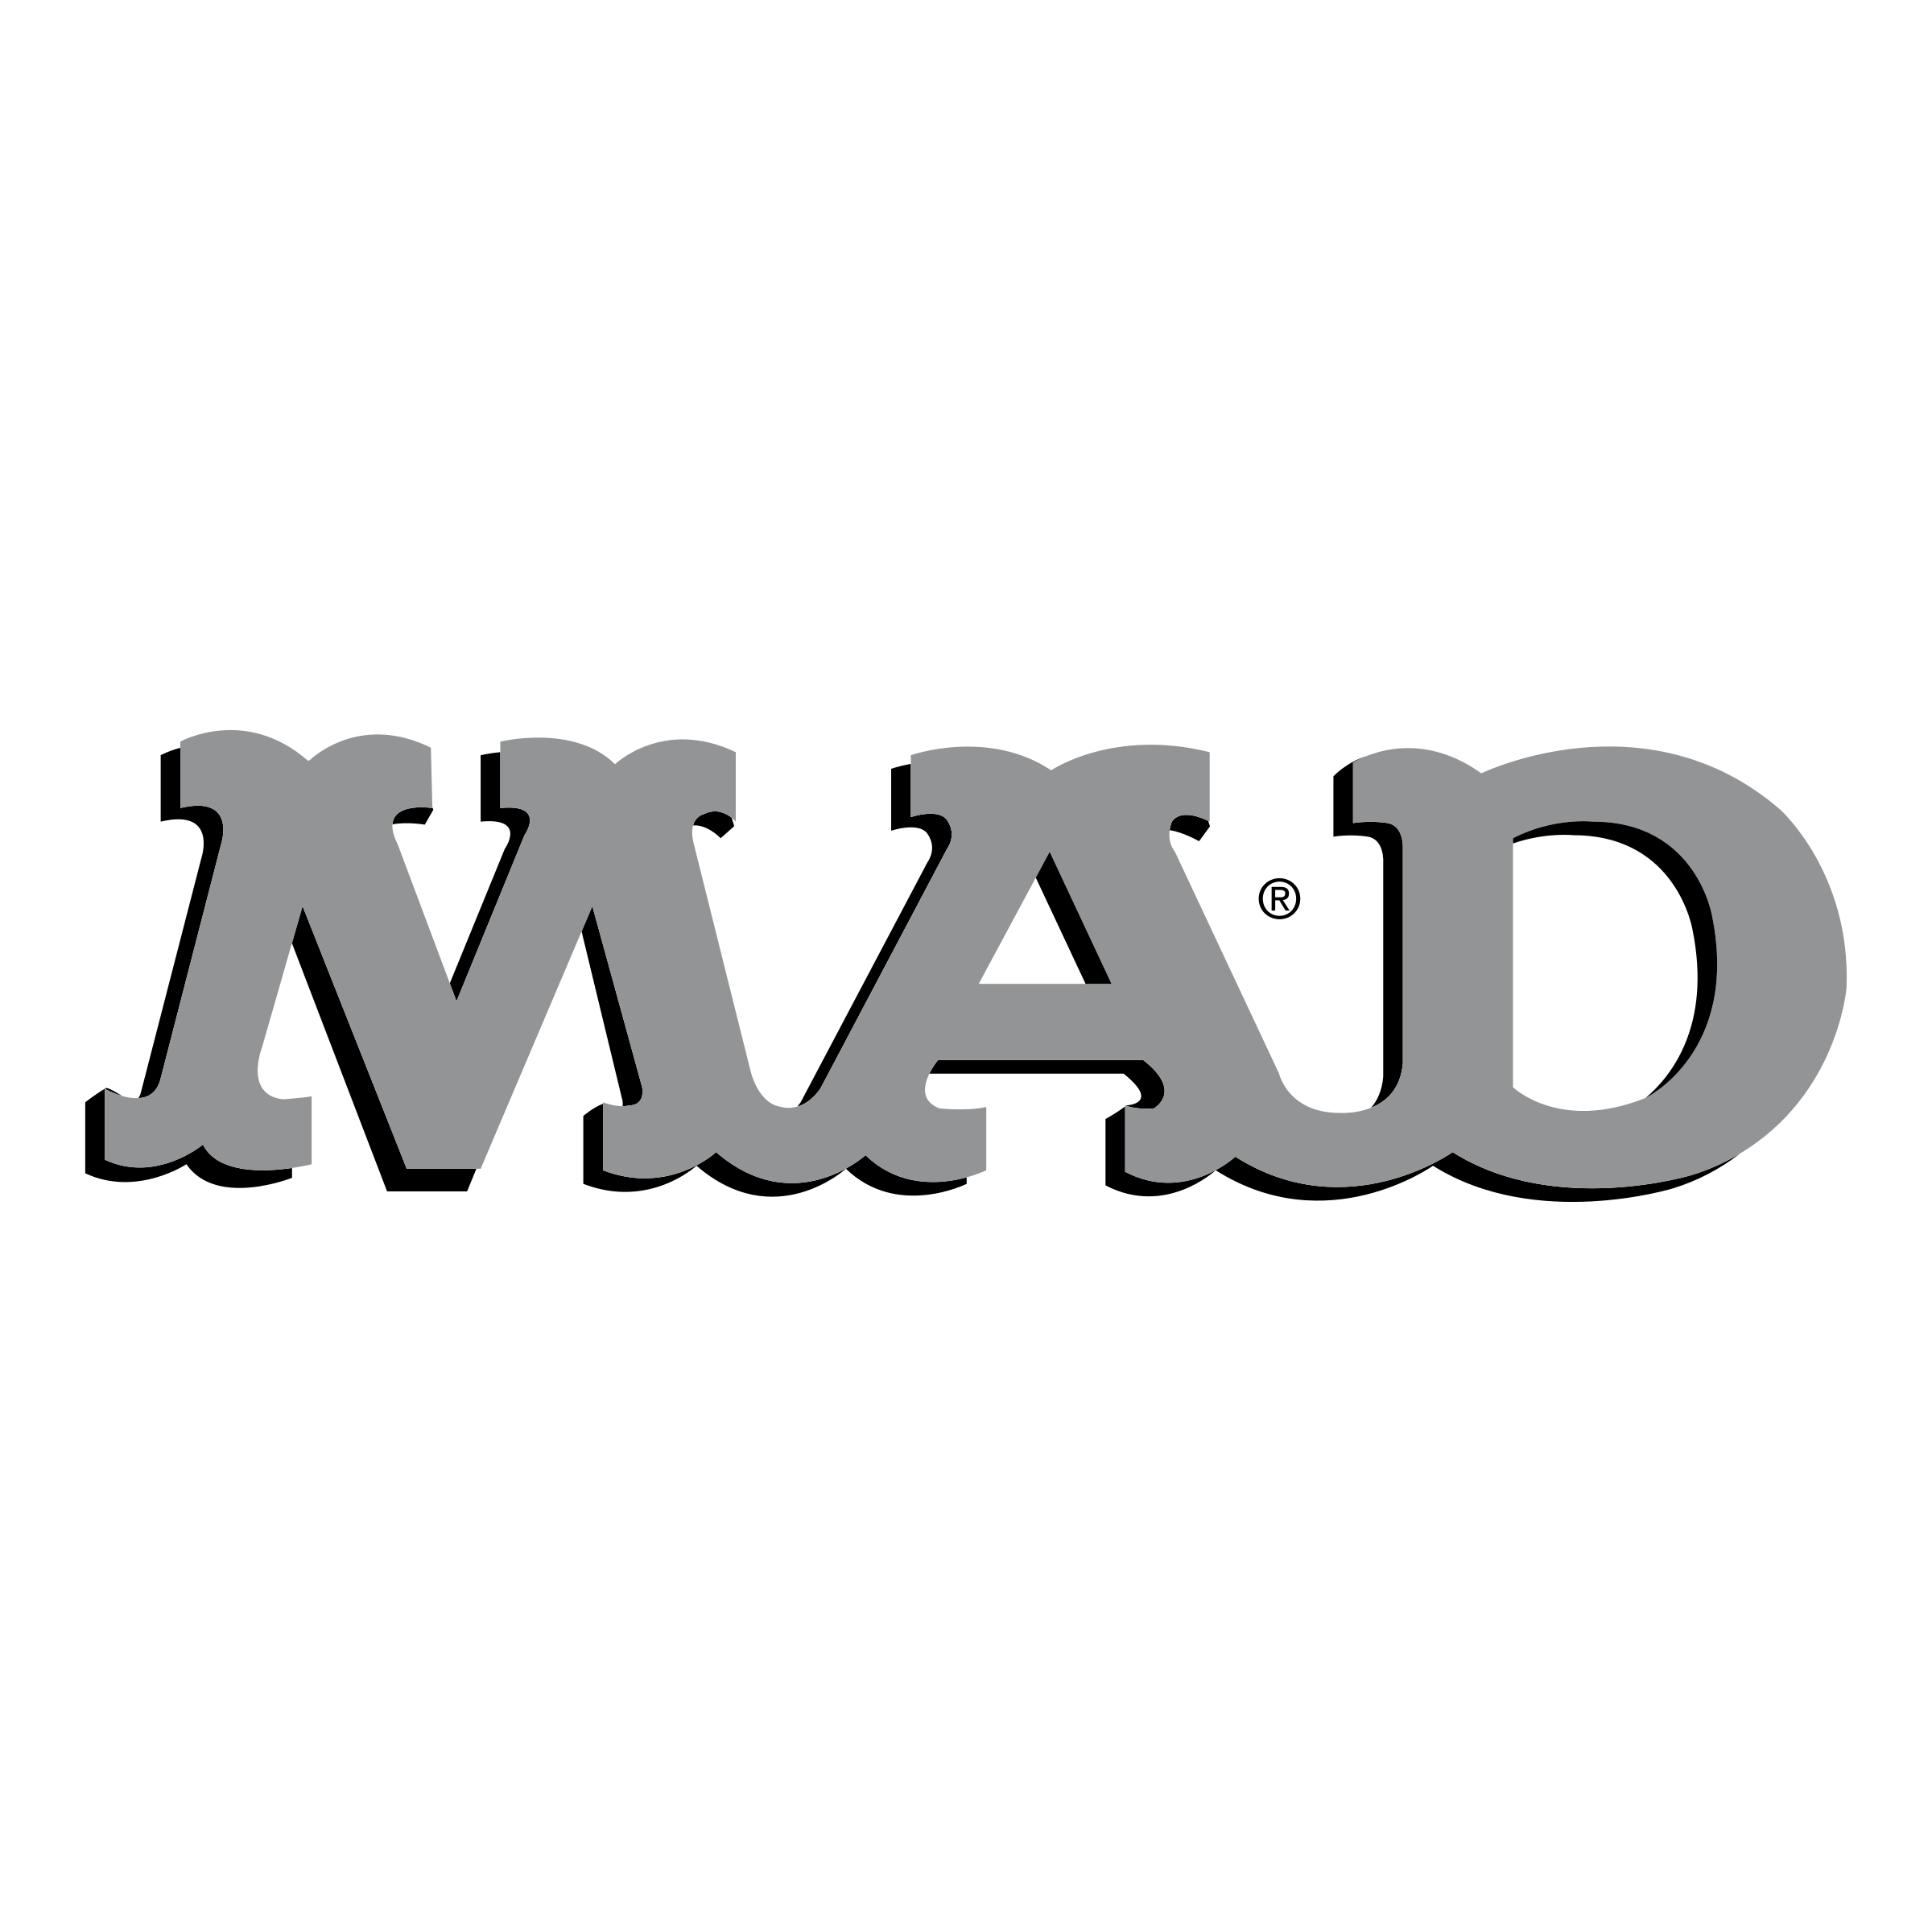 Mad Logo - Mad Logo PNG Transparent & SVG Vector - Freebie Supply